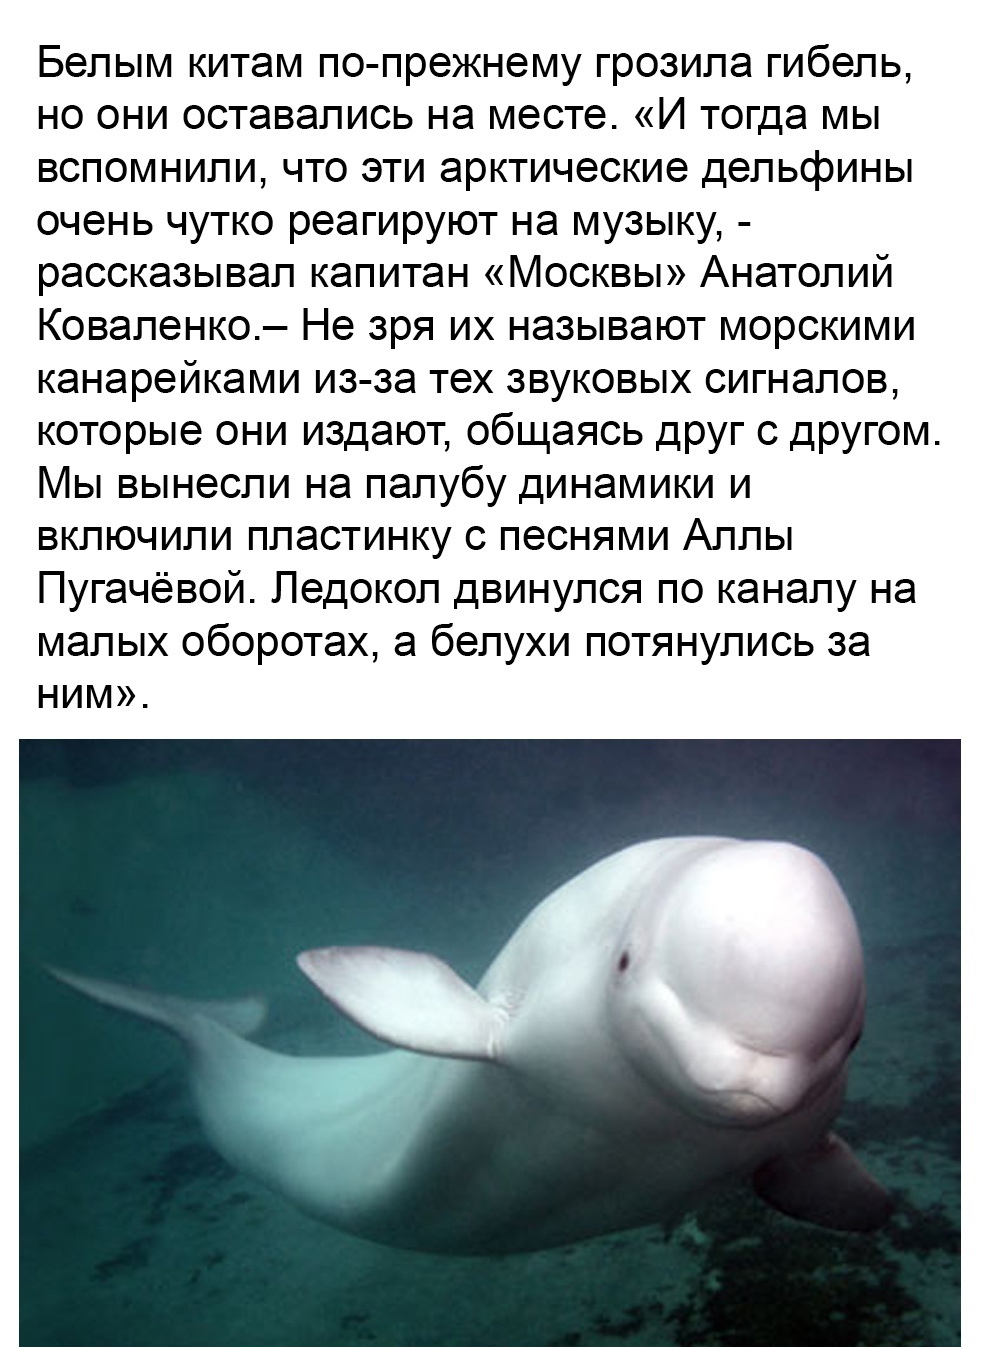 White whales and Pugacheva - Picture with text, Longpost, Chukotka, Alla Pugacheva, Animal Rescue, Positive, Beluga whales